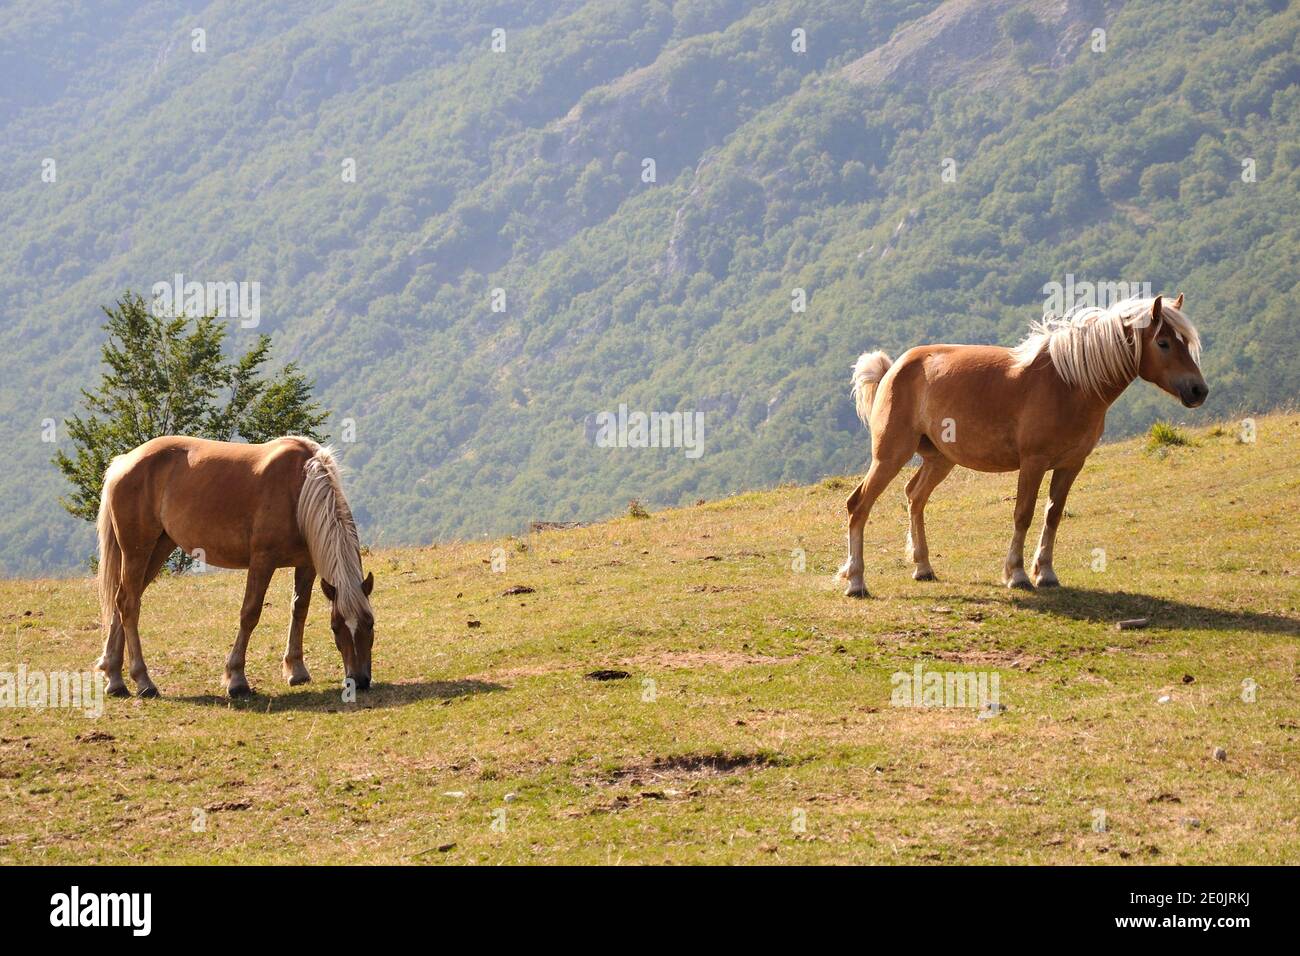 Two horses eating grass in a mountain pasture in the Monti Sibillini National Park. Pintura di Bolognola, Macerata, Marche region, Italy. Stock Photo